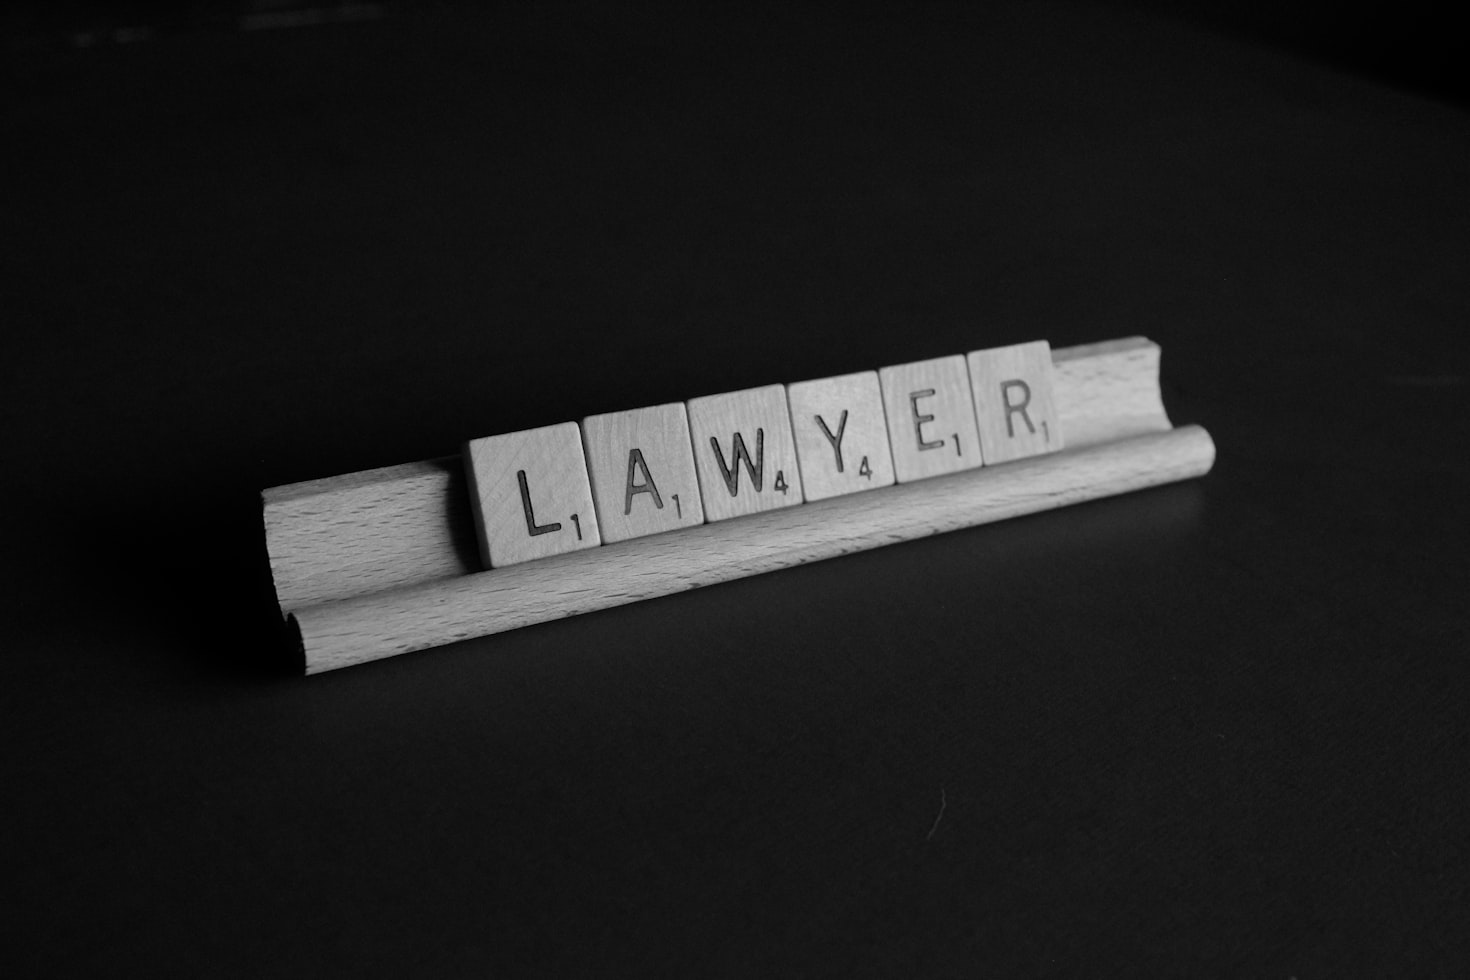 Lawyer written with Scrabble tiles